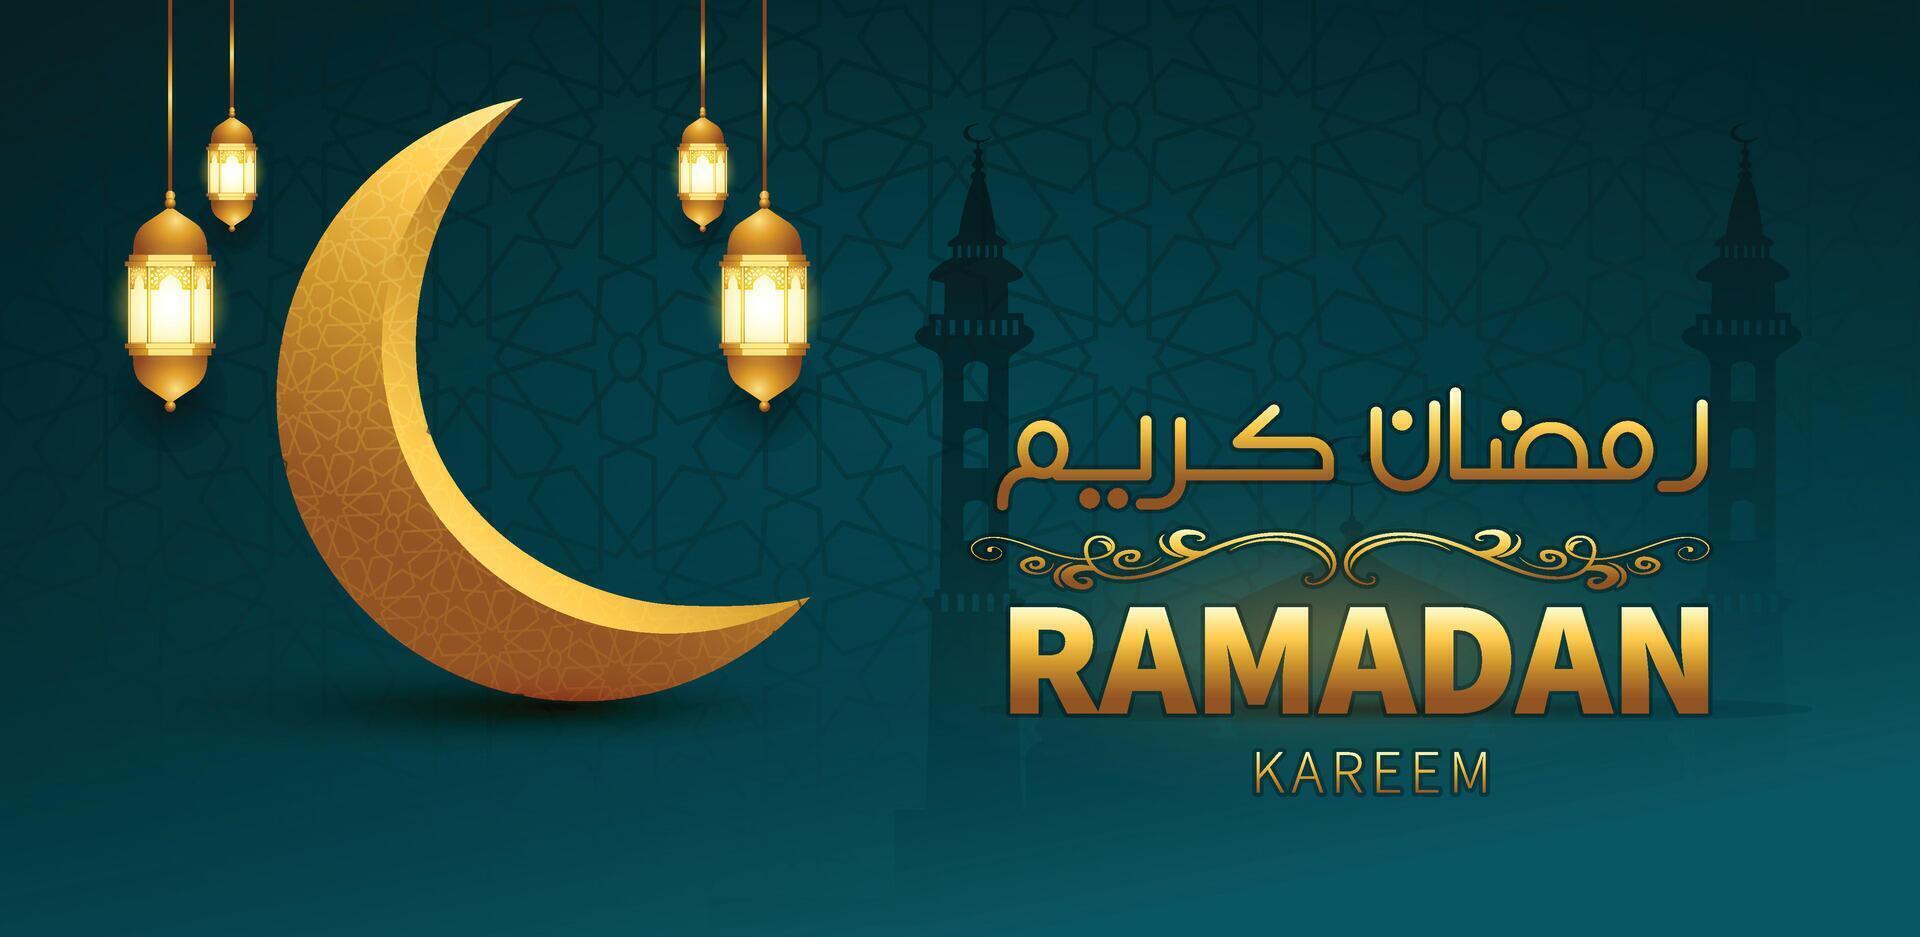 Ramadan Kareem Gold Calligraphy Greeting card banner design vector